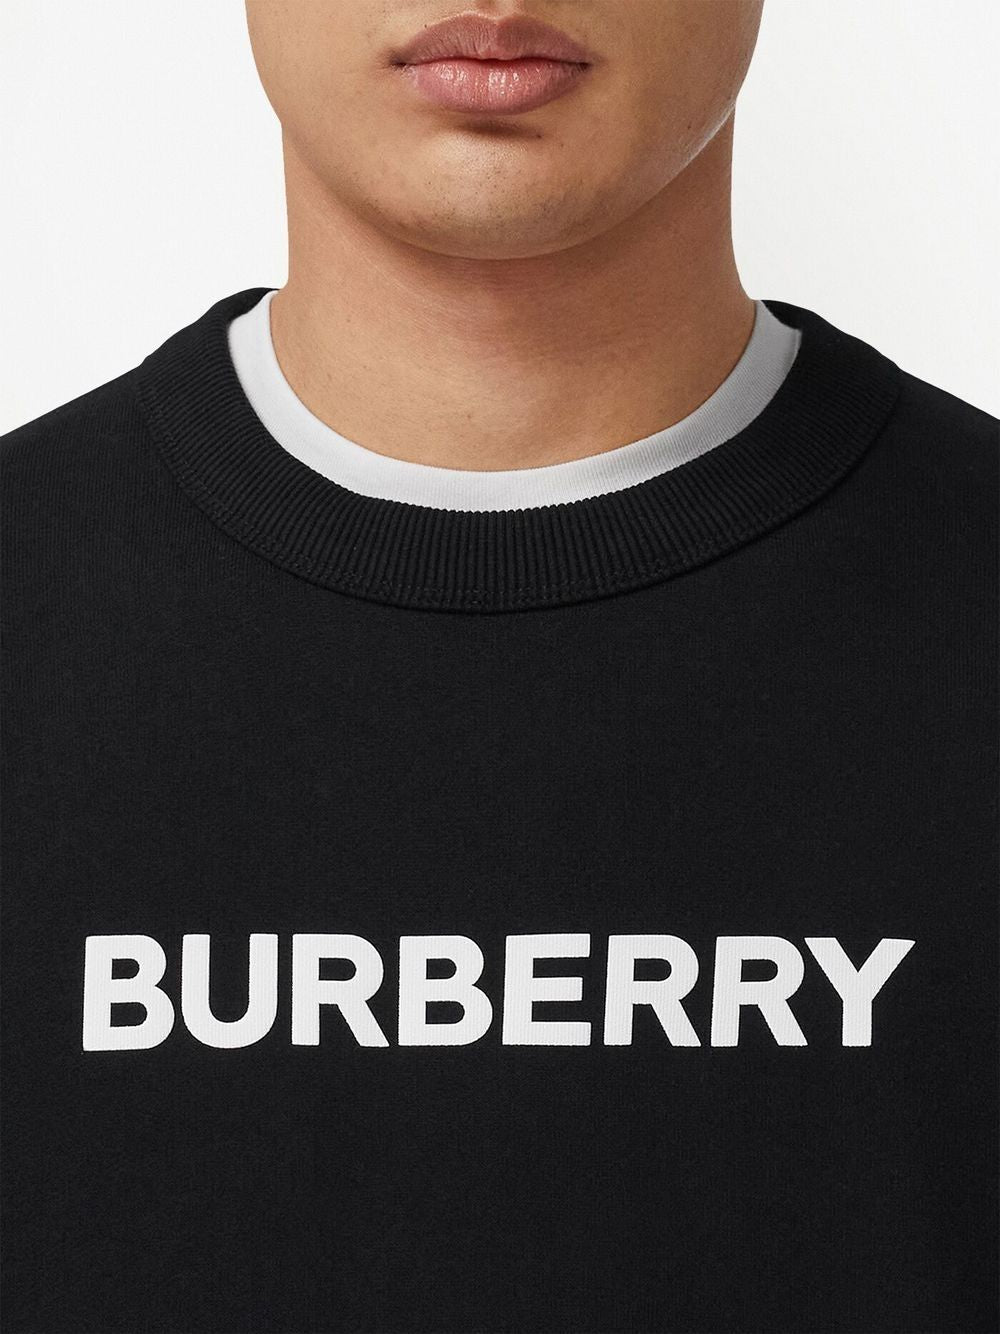 Burberry Zwart Sweater